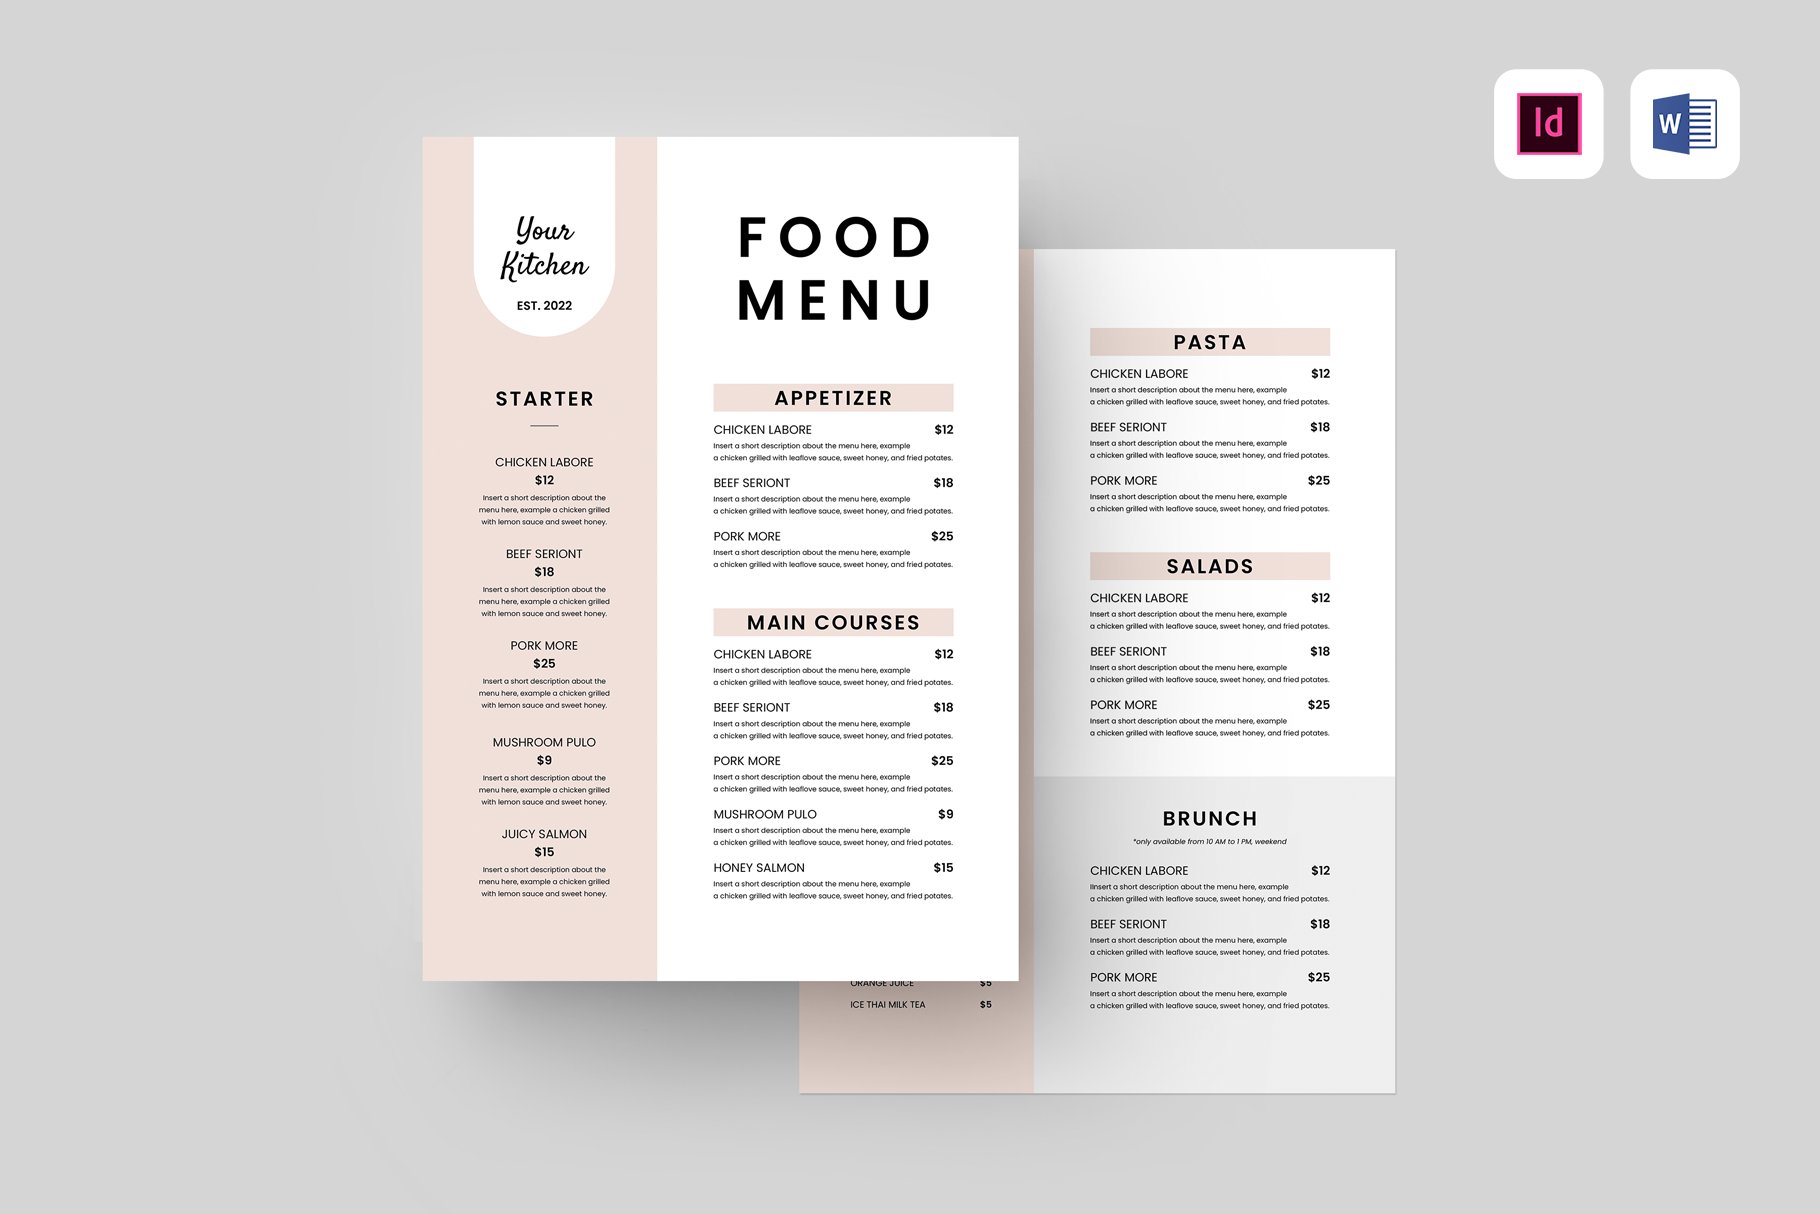 Food Menu | MS Word & Indesign cover image.